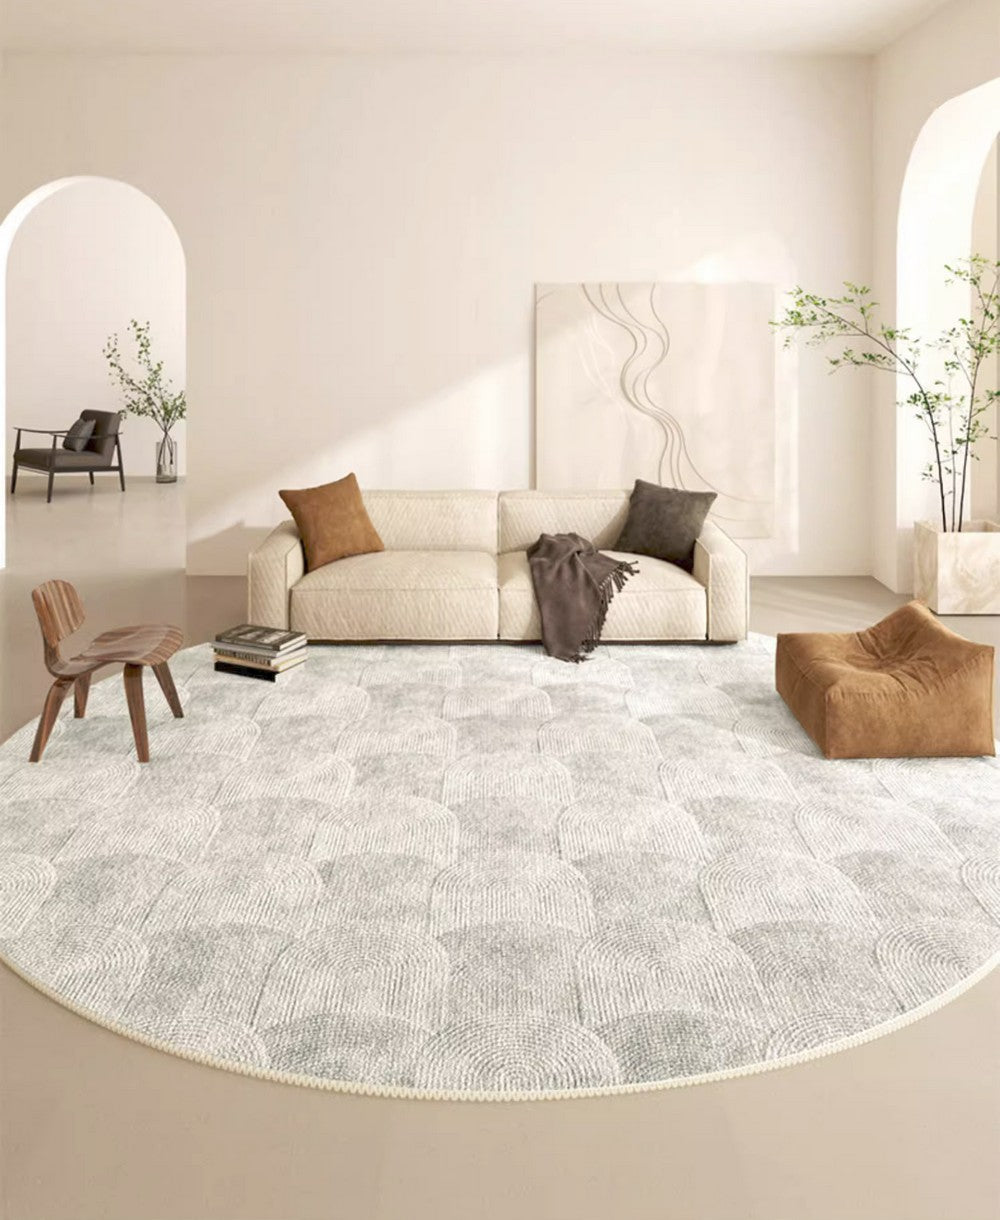 Large living room rug 200x300